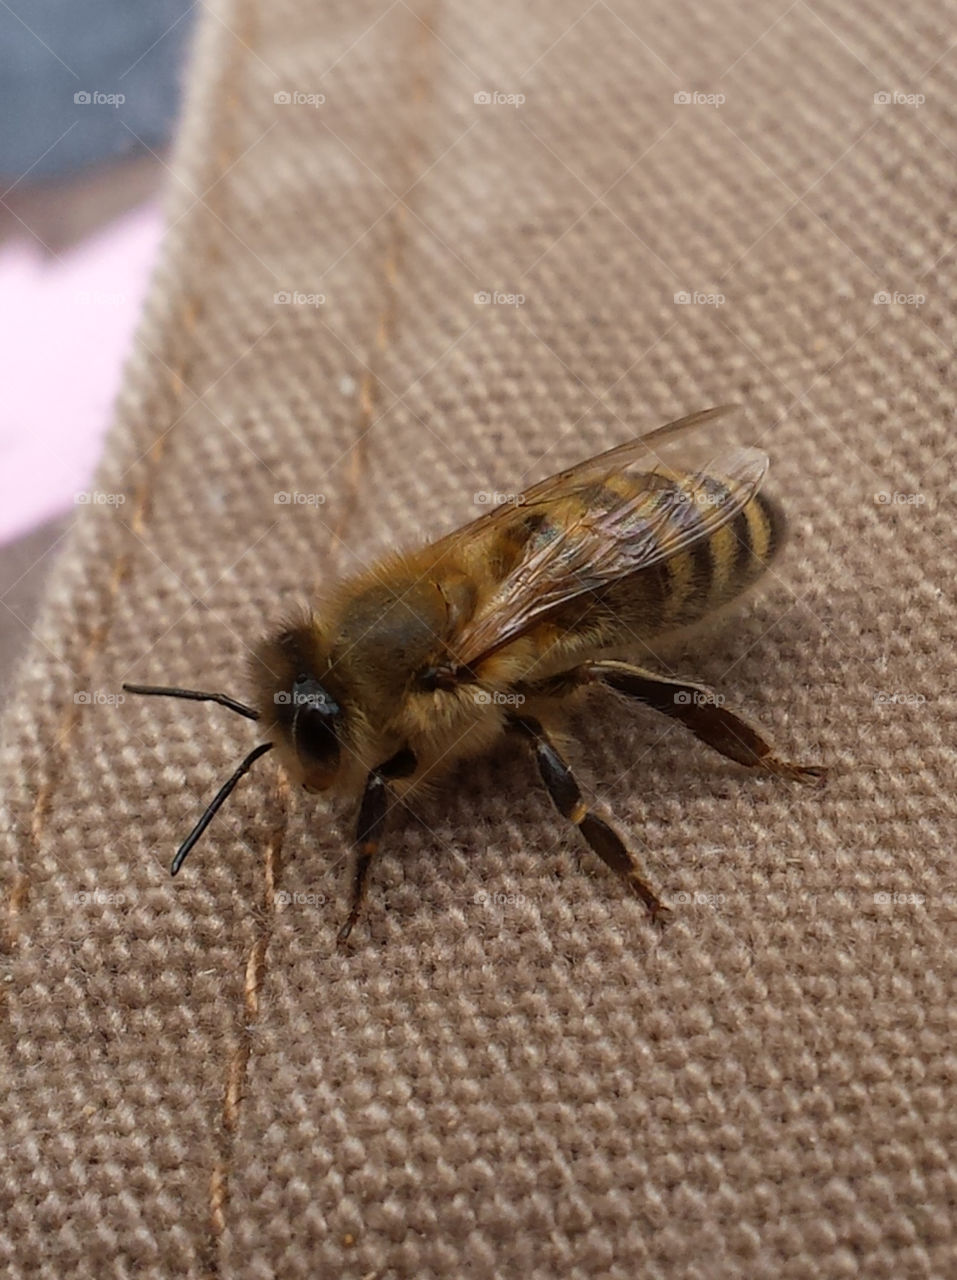 Honey bee. Honey bee landed on a canvas jacket